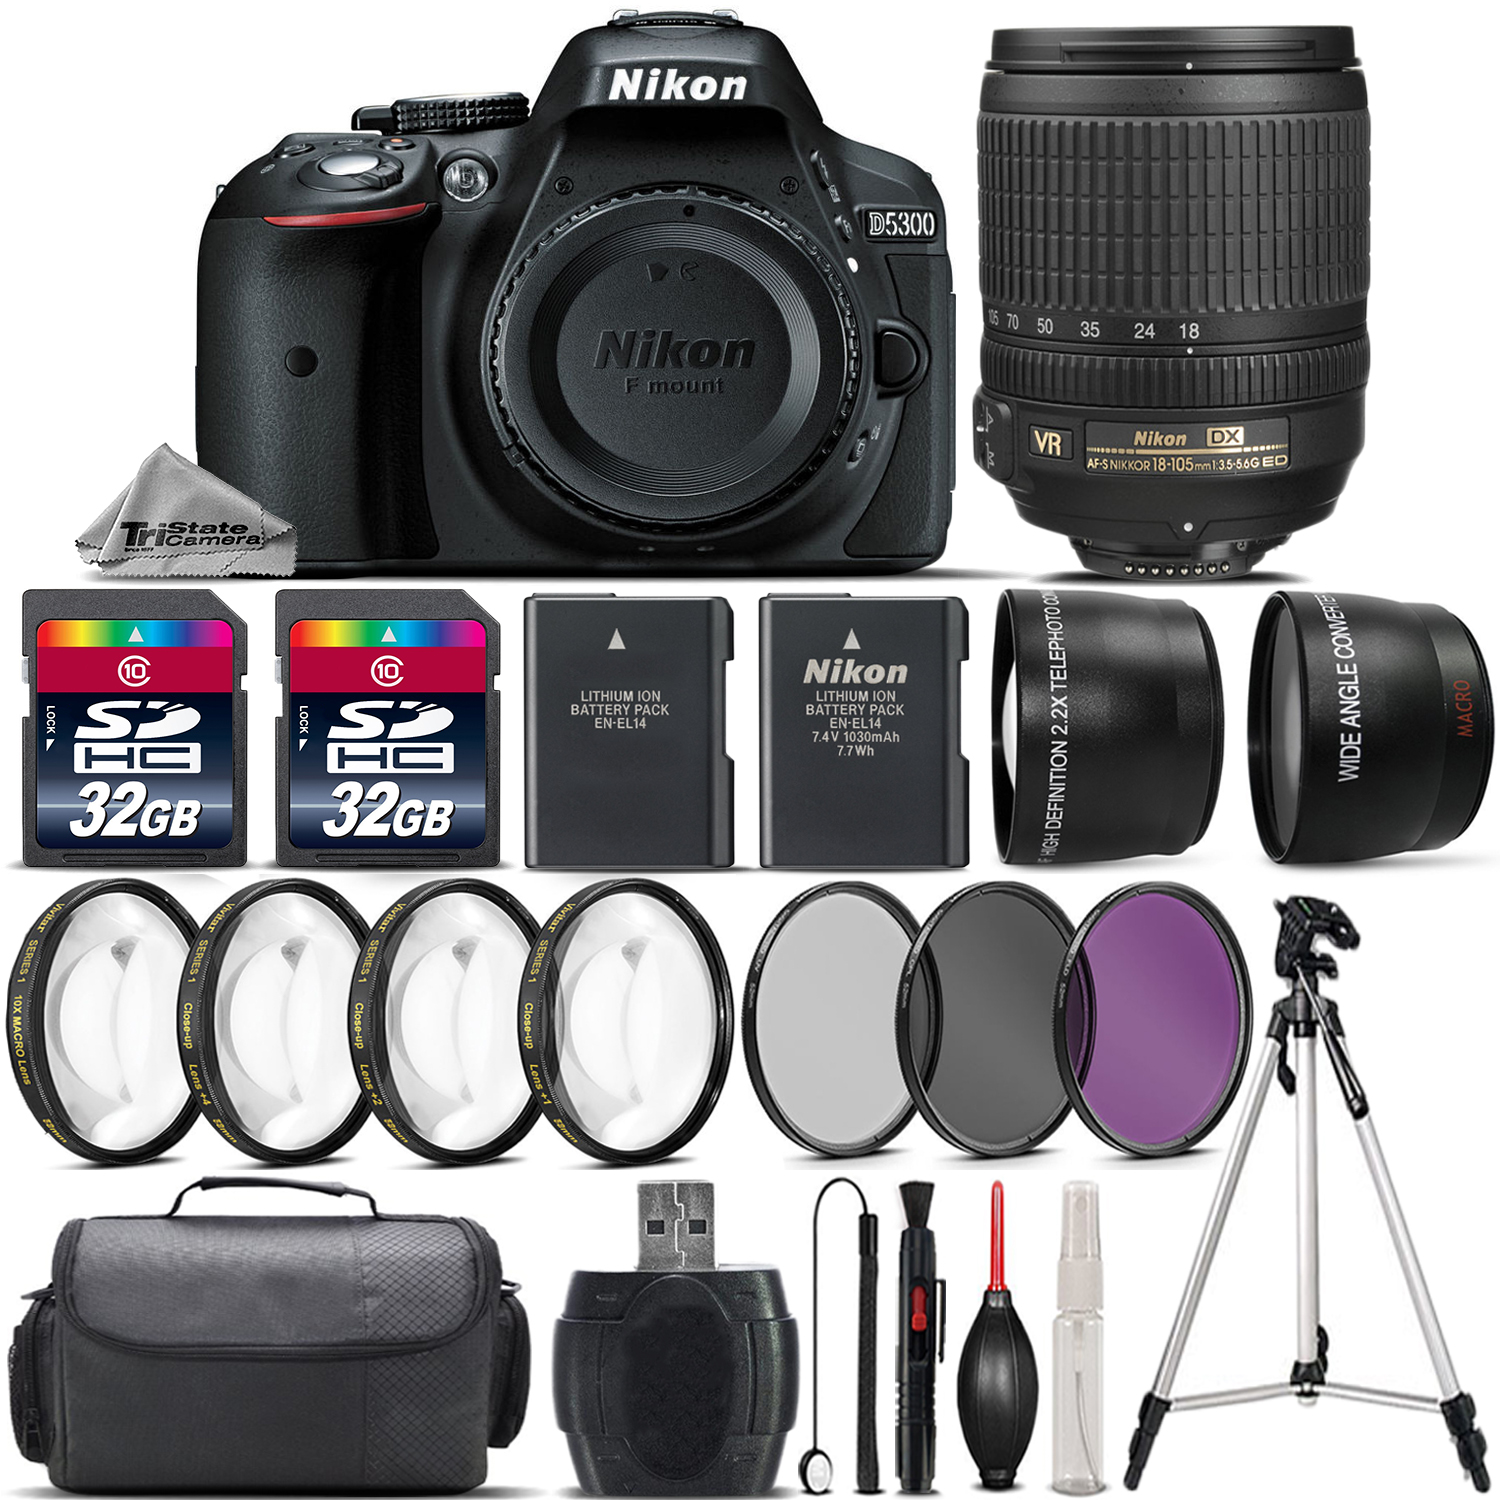 D5300 DSLR Camera with Nikon 18-105 VR Lens + Extra Battery +4PC Macro Kit *FREE SHIPPING*